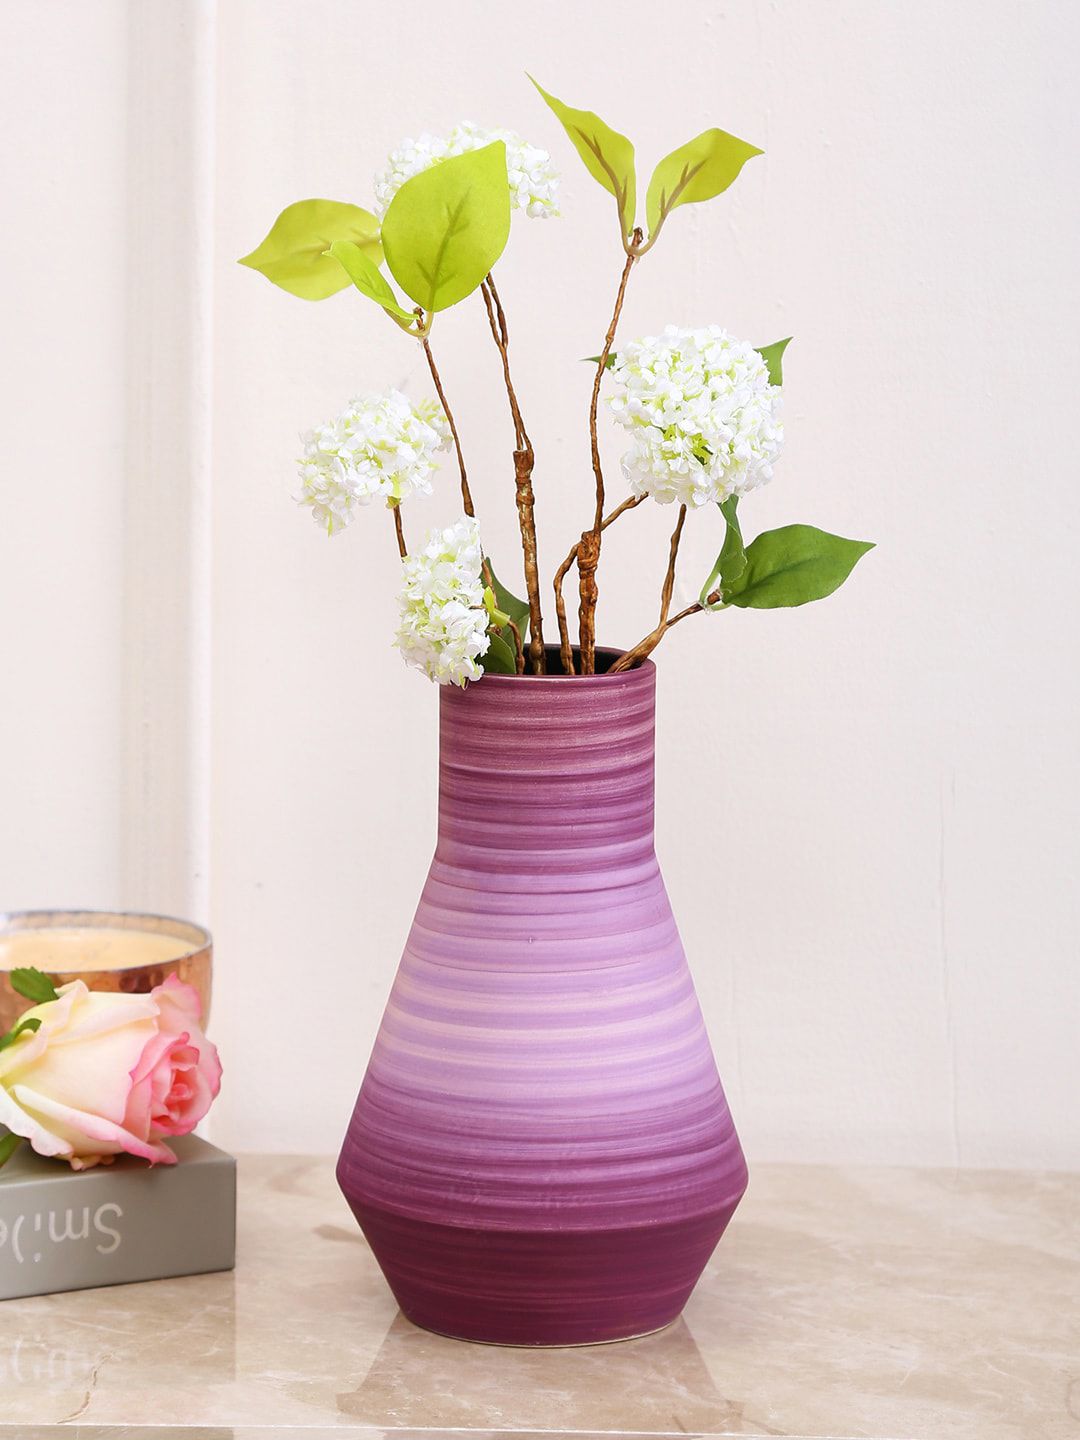 Aapno Rajasthan Pink Striped Ceramic Flower Vase Price in India